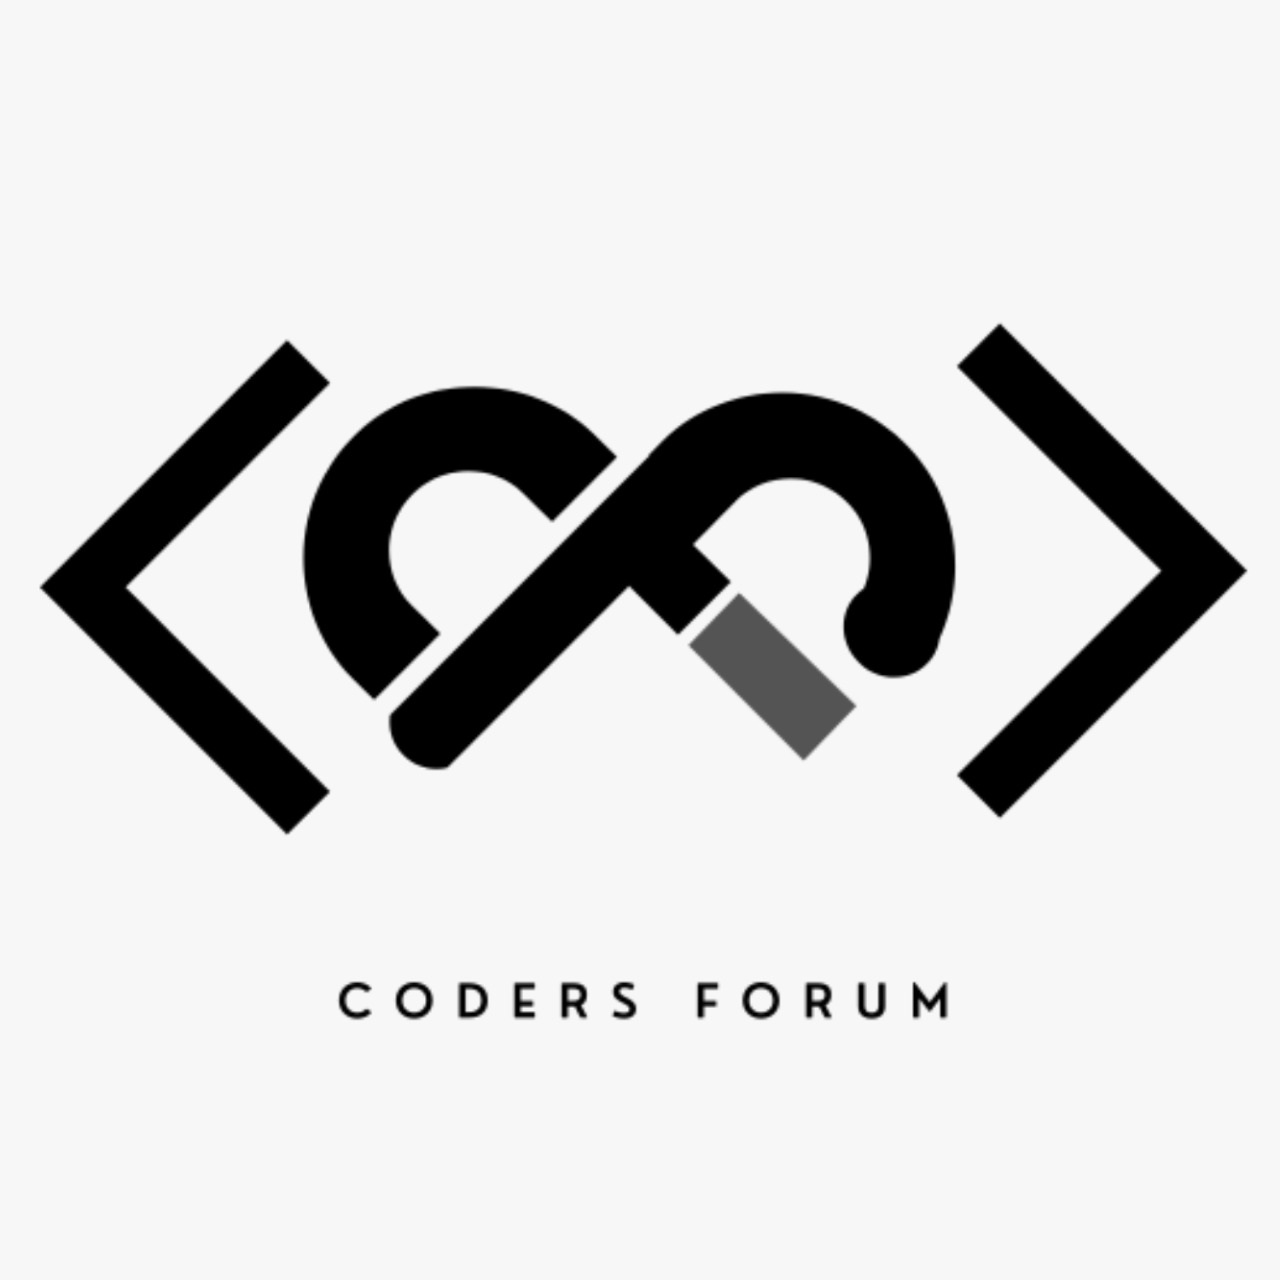 Coders' Forum logo